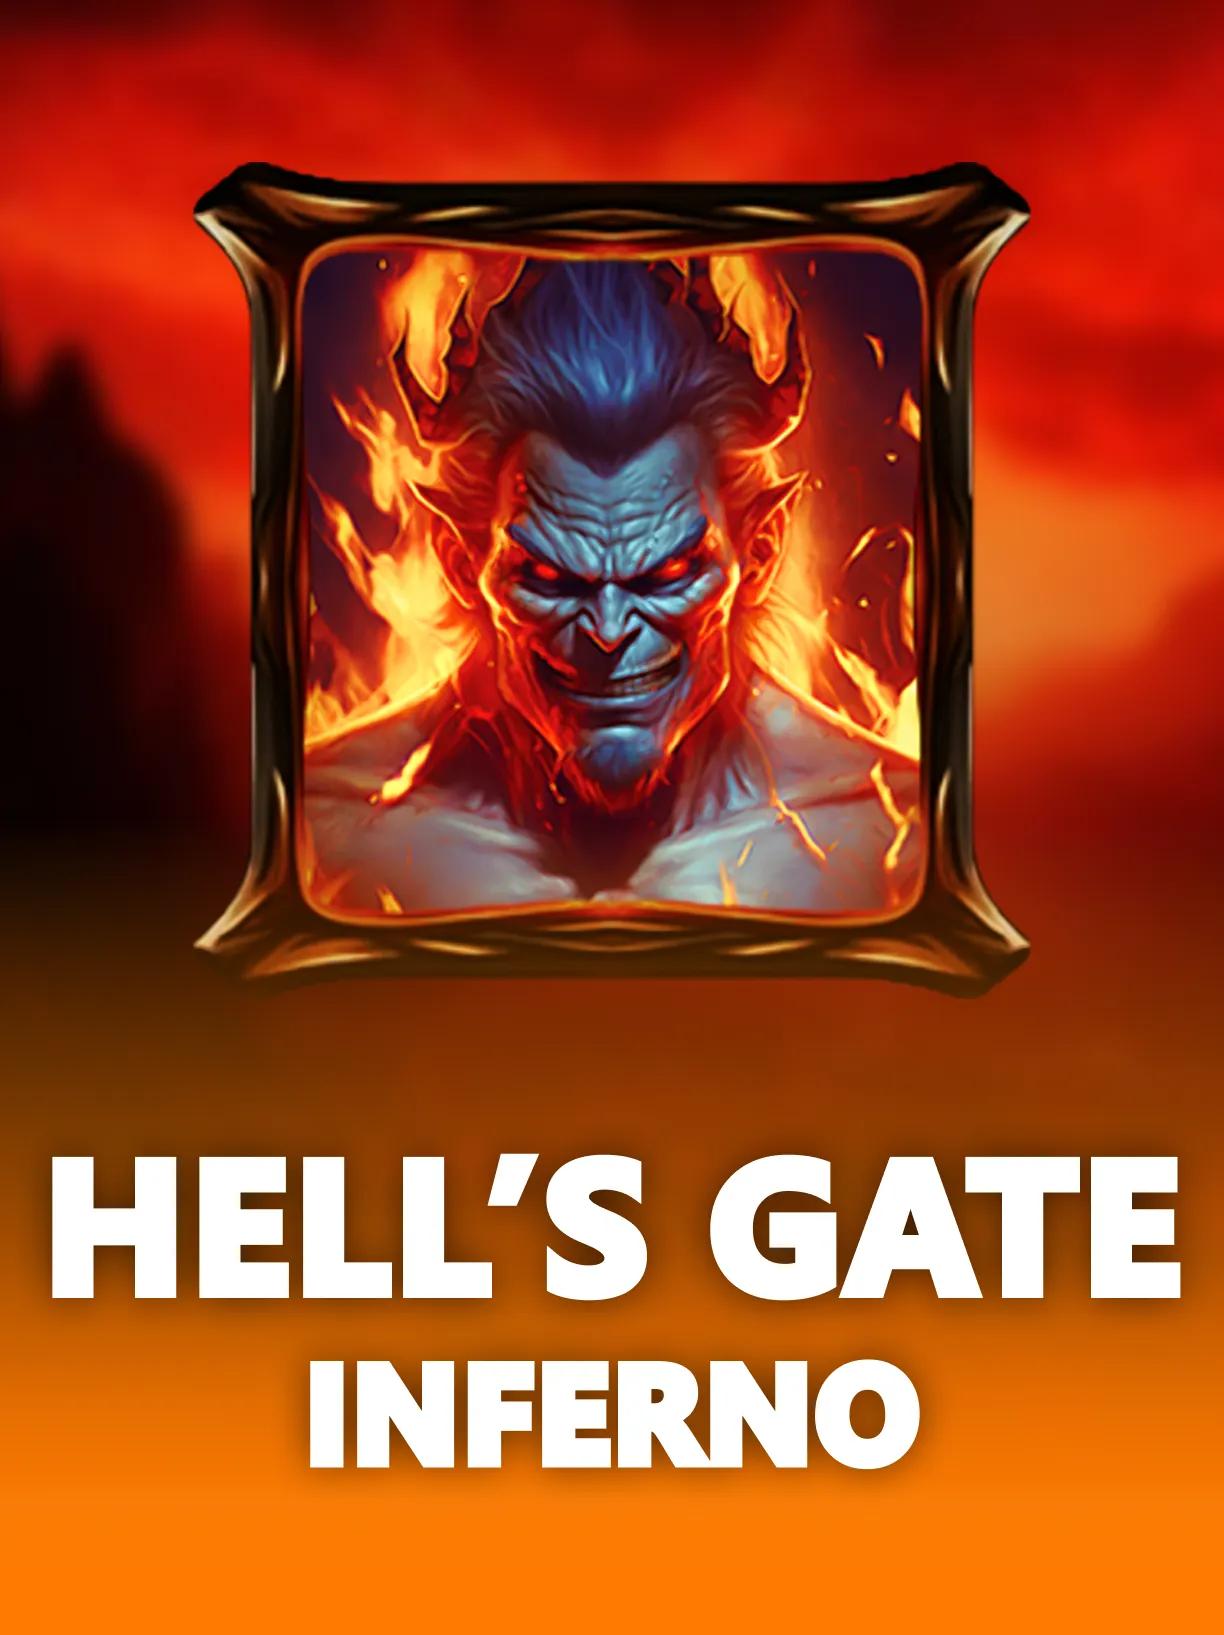 Hells Gate Inferno